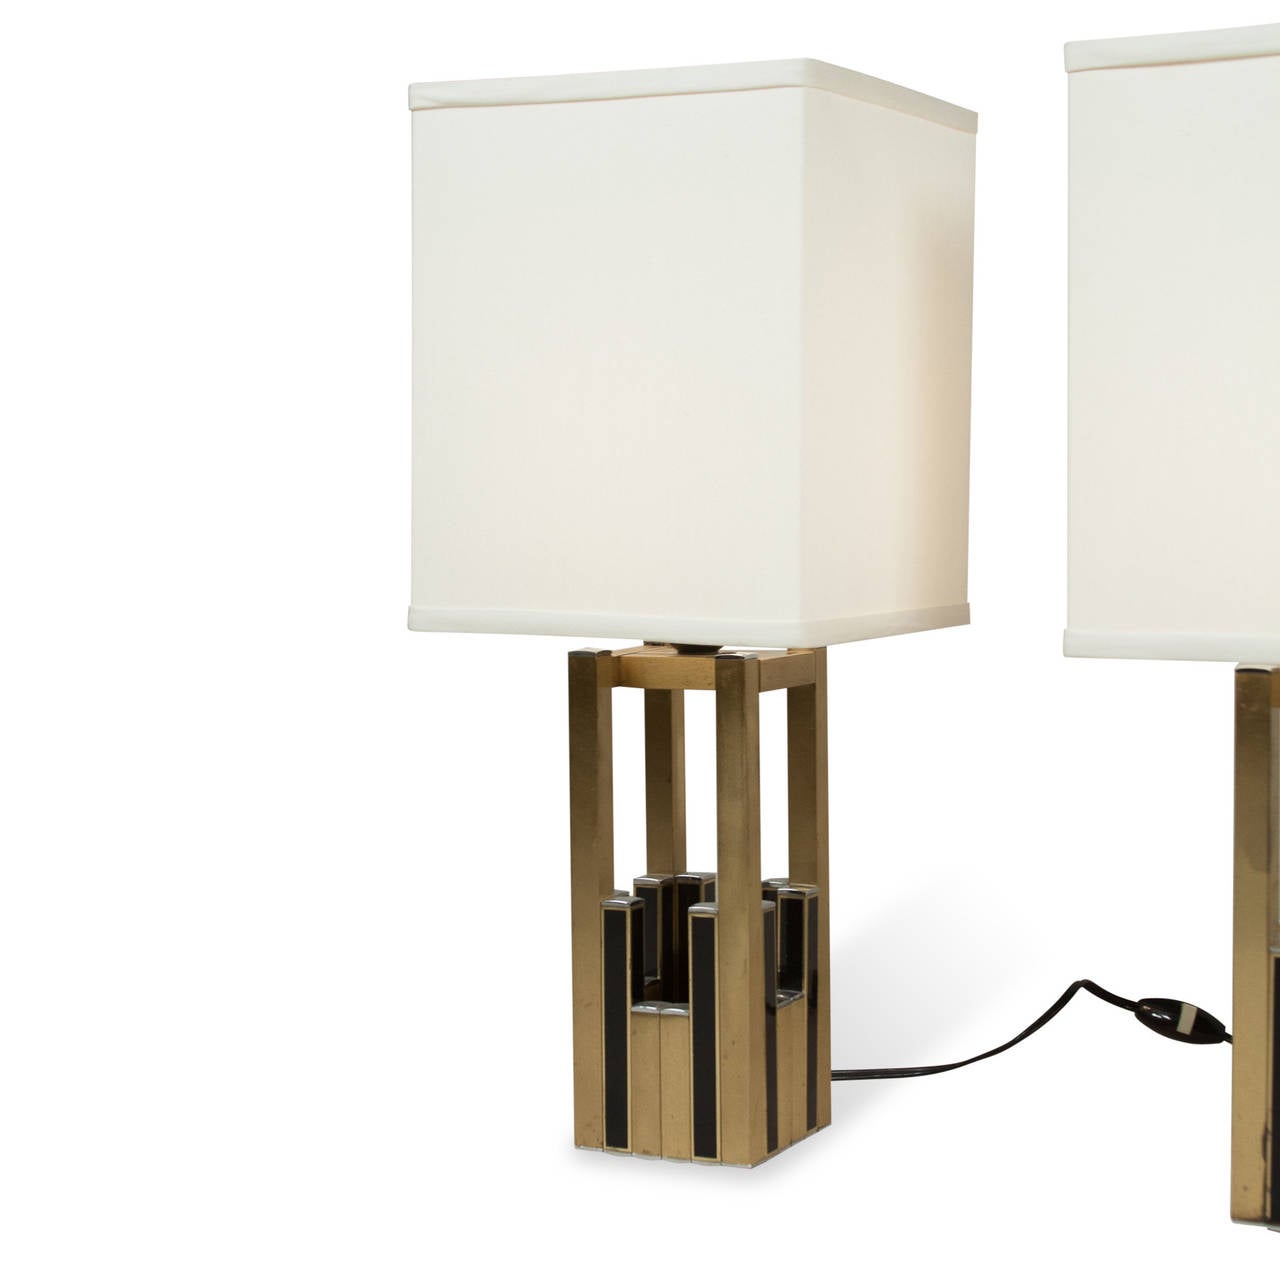 Late 20th Century Pair of Lumica Table Lamps, Italian, 1970s